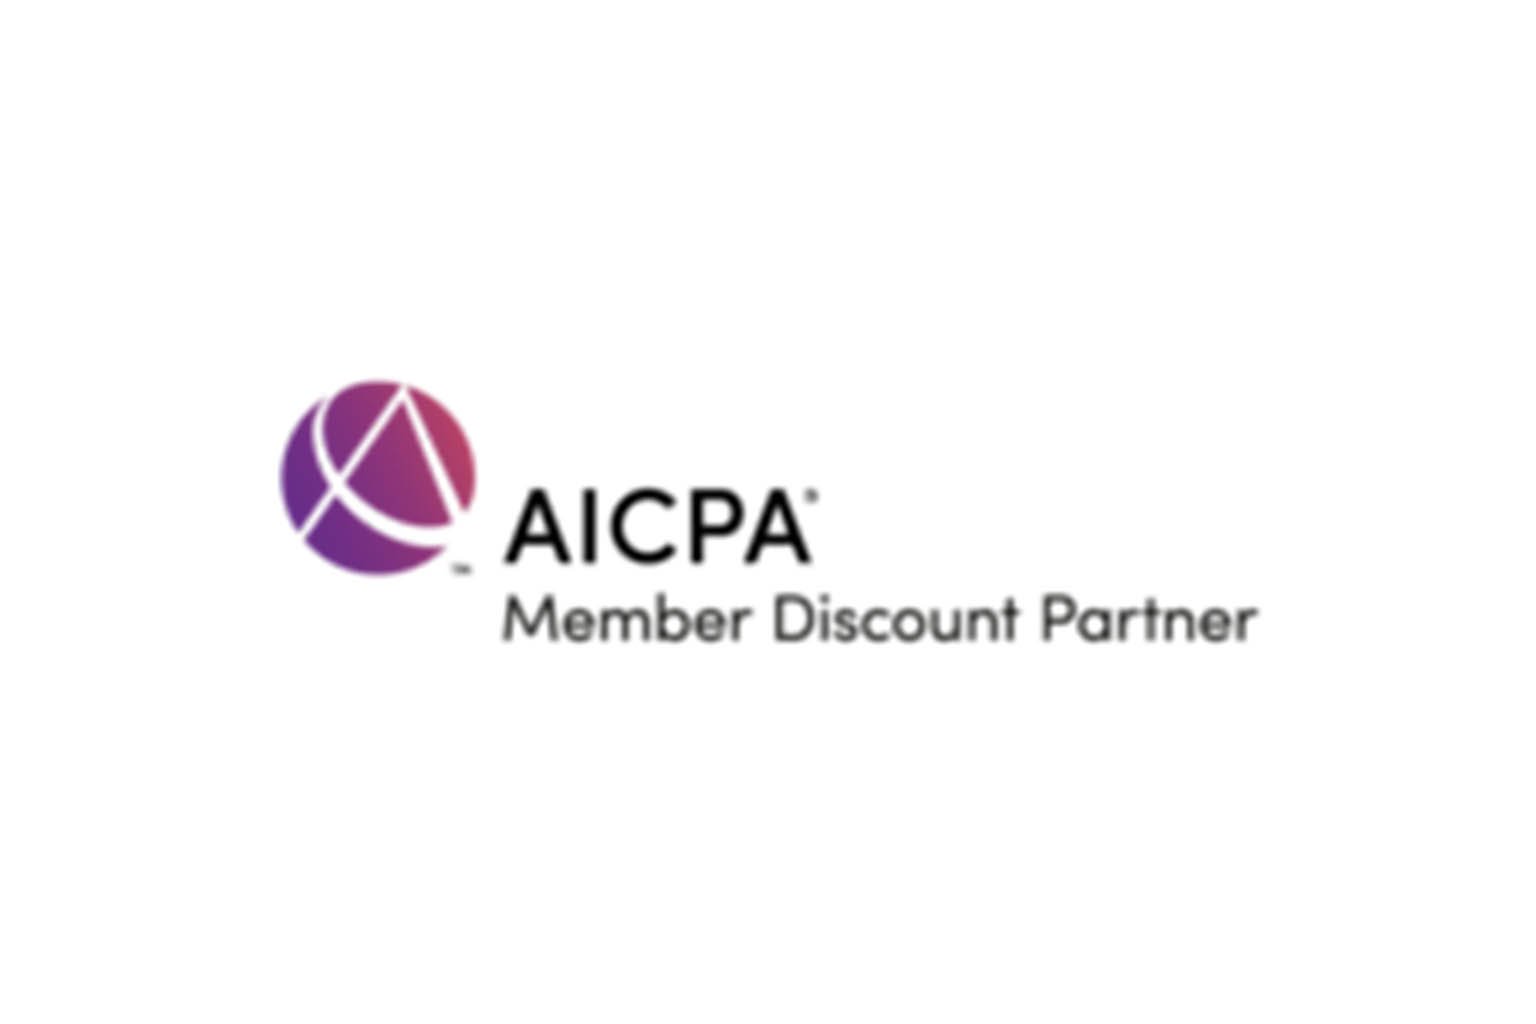 AICPA members enjoy discounts on BizFilings